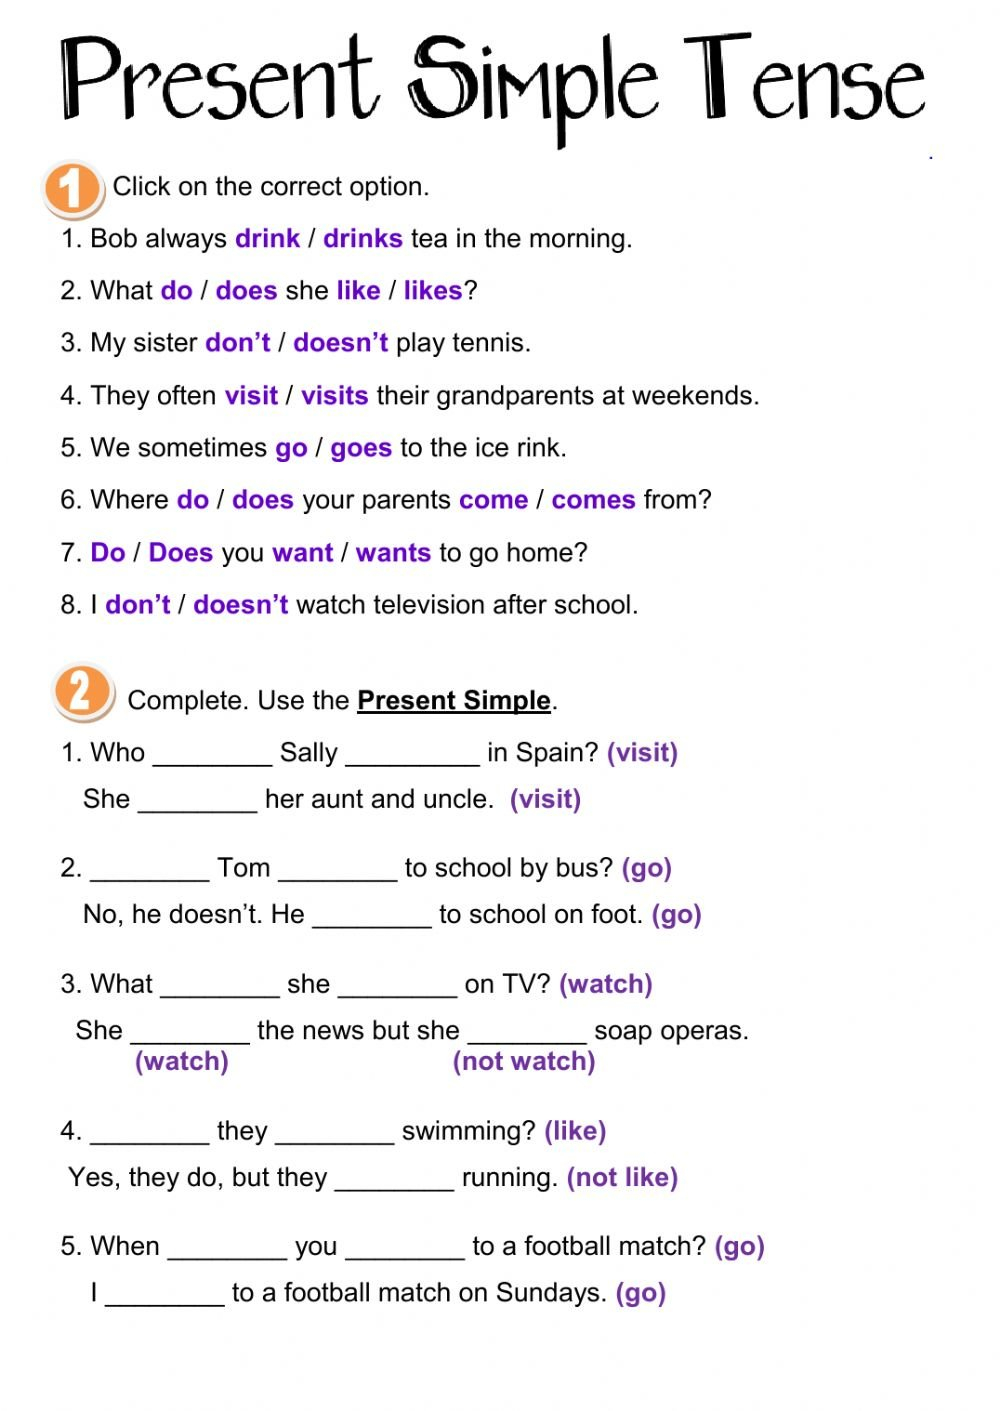 Present Simple Tense  Interactive Worksheet Inside Simple Present Tense Worksheets